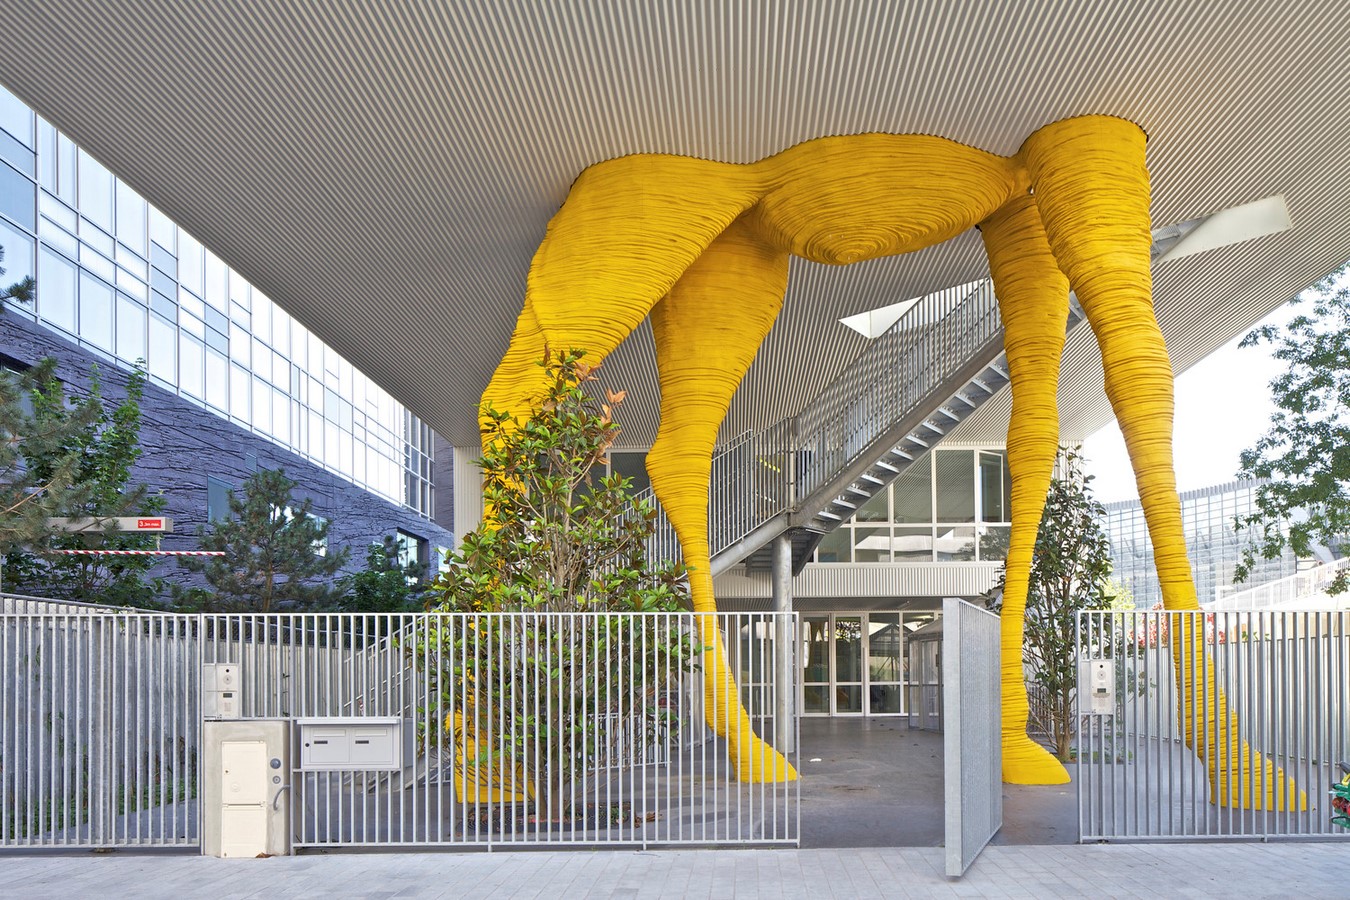 Giraffe Childcare Center by Hondelatte Laporte Architectes: Storytelling through Architecture - Sheet4